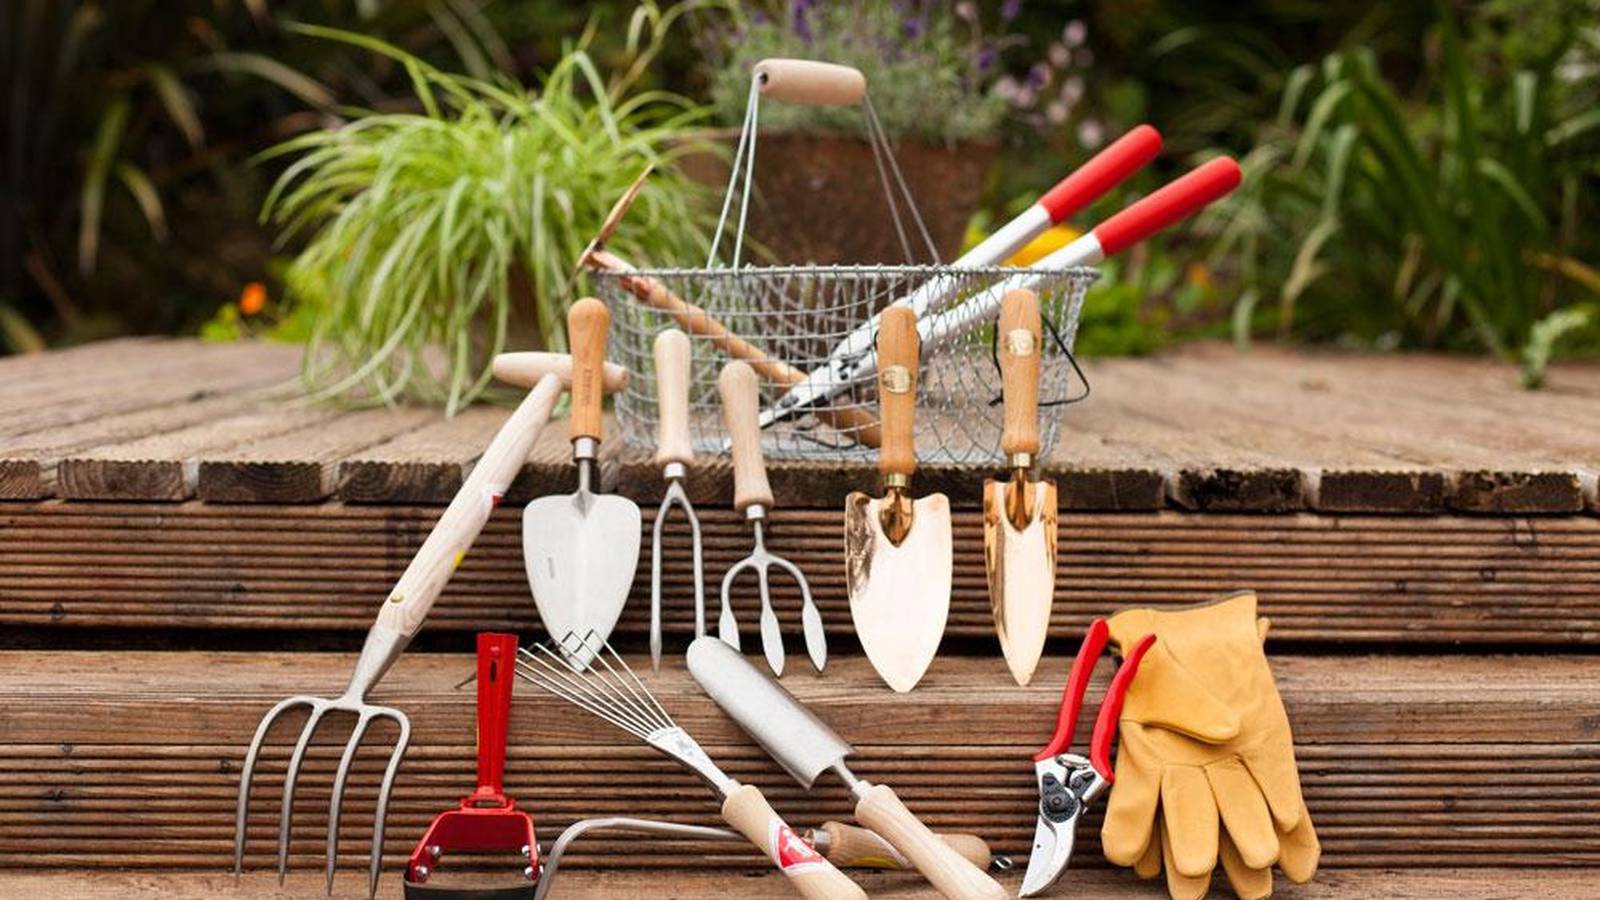 Garden Tool Sharpener Whetstone by Sneeboer Tools